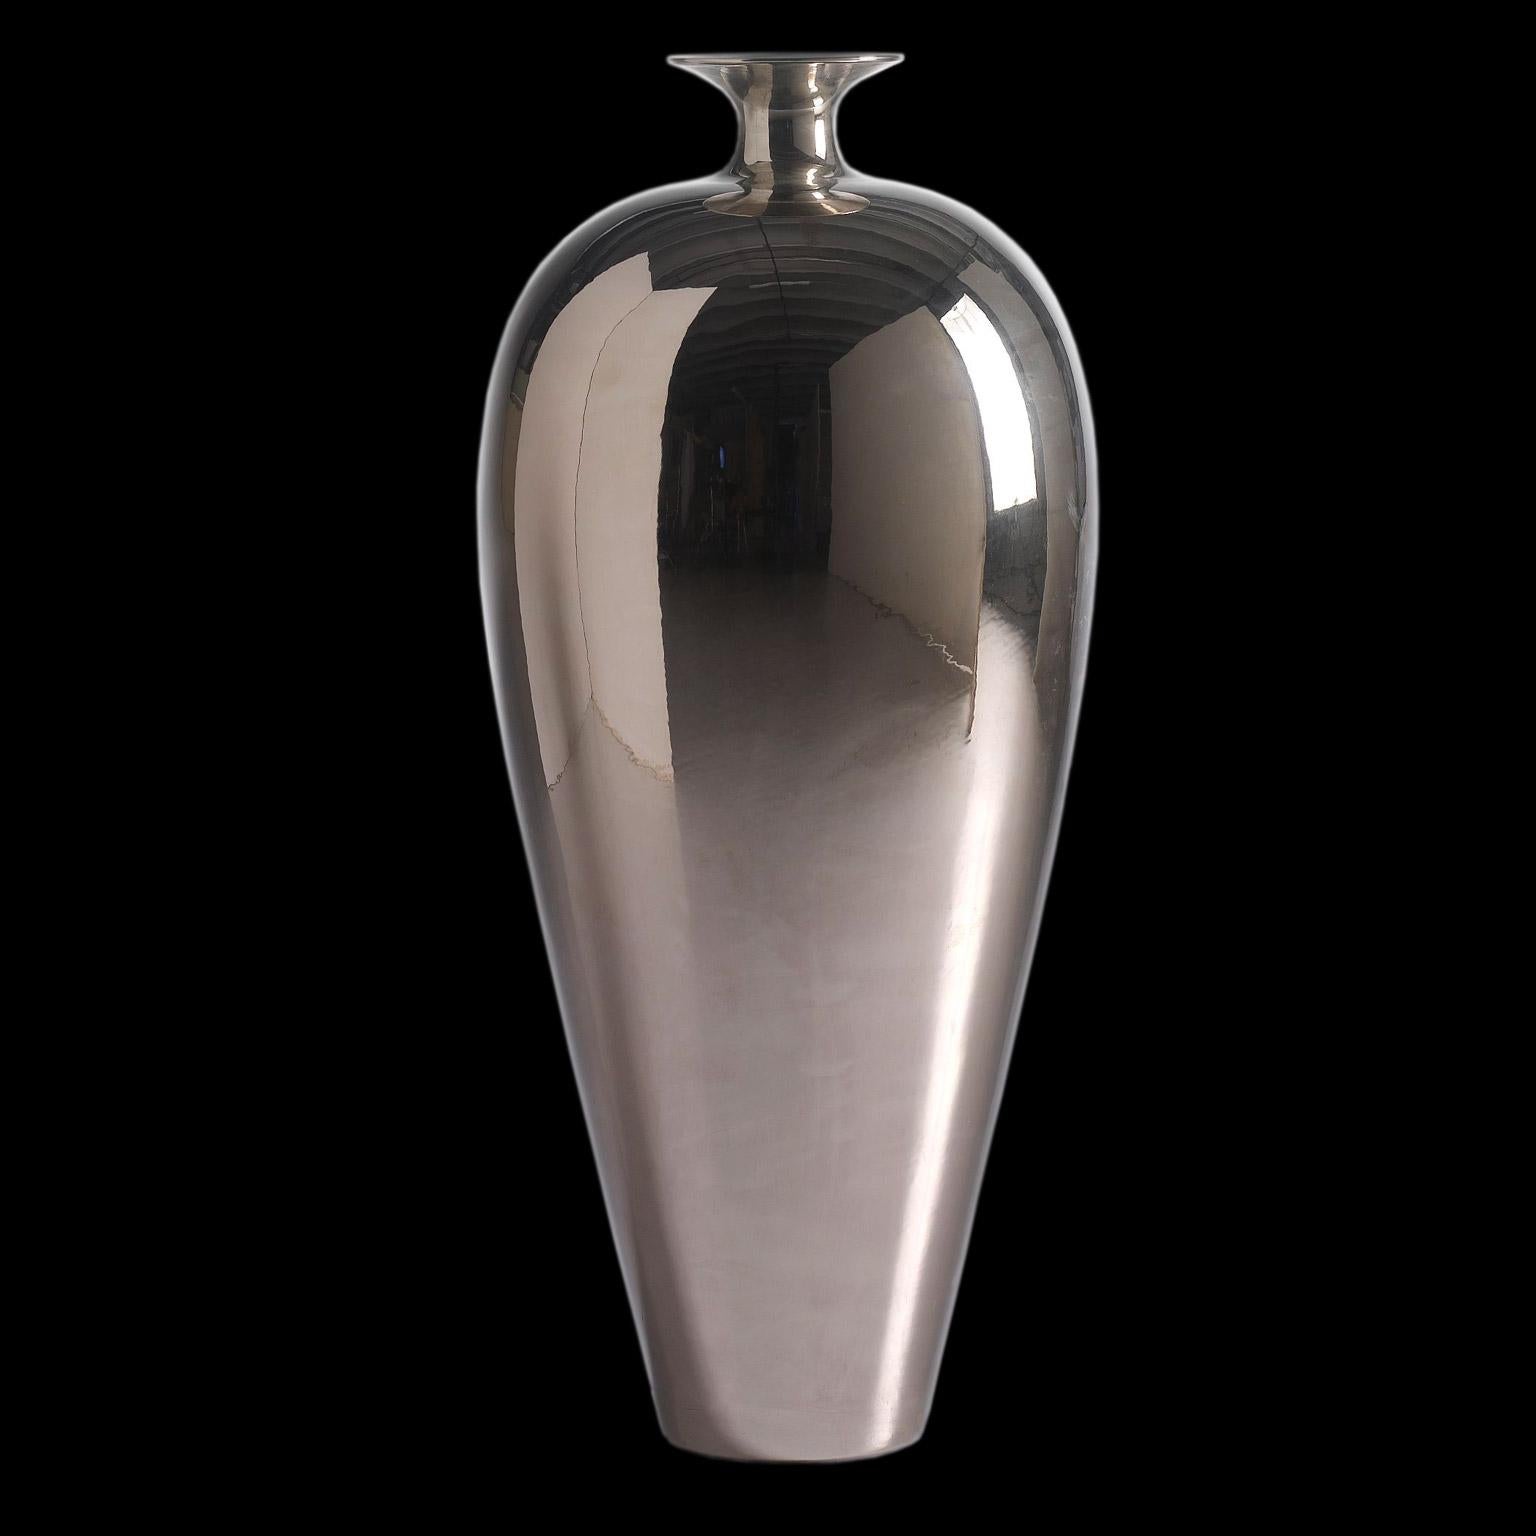 Ceramic vase DOLLY handcrafted in platinum 

cod. BD001 
measures: H. 95.0 cm. - Dm. 42.0 cm.